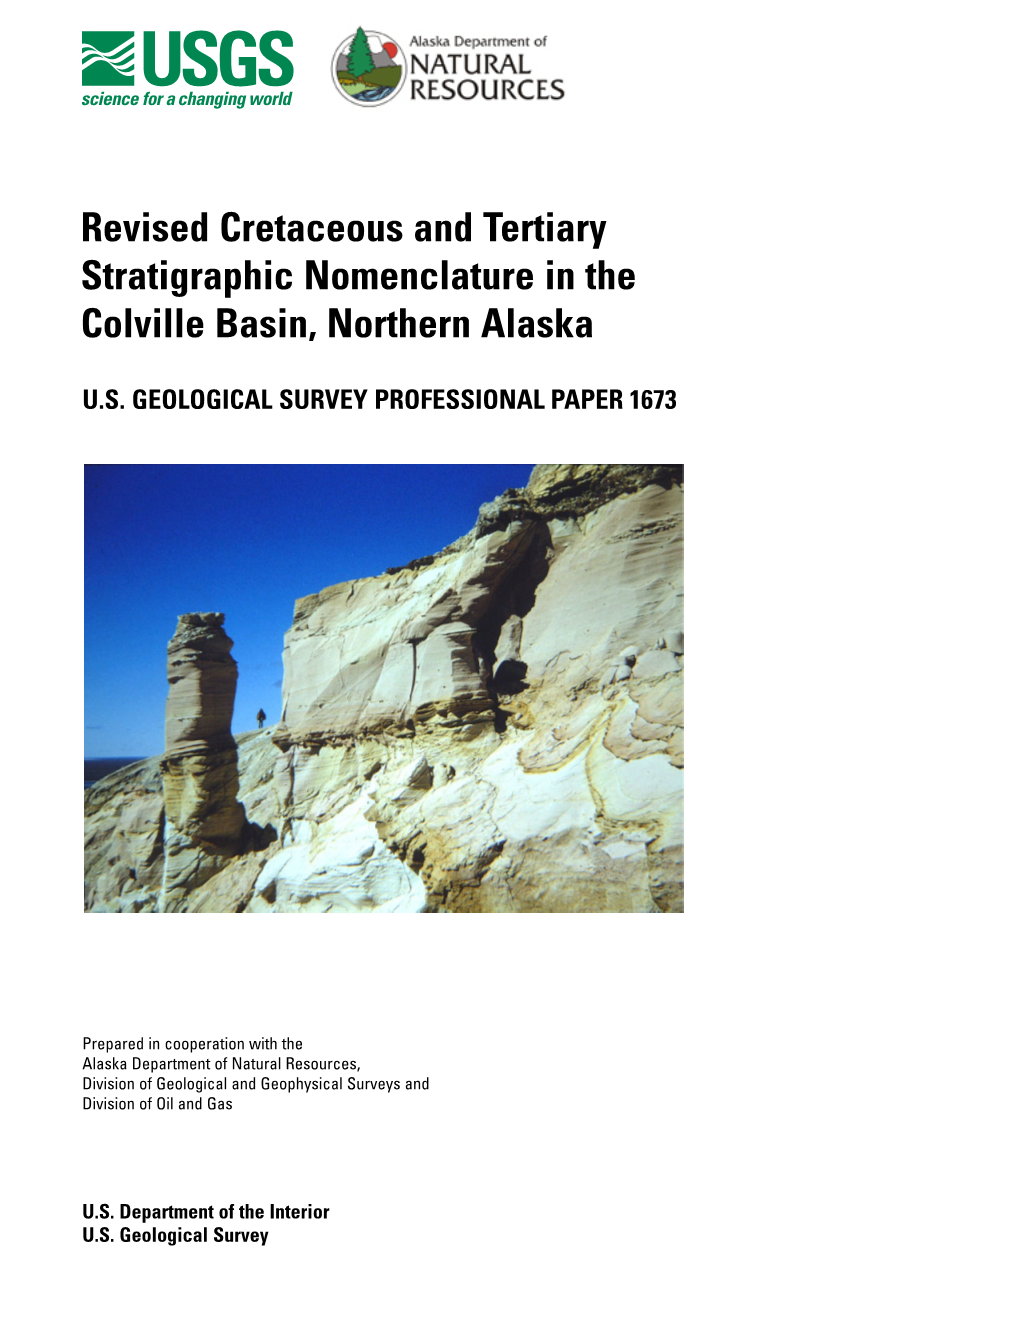 U.S. Geological Survey Professional Paper 1673